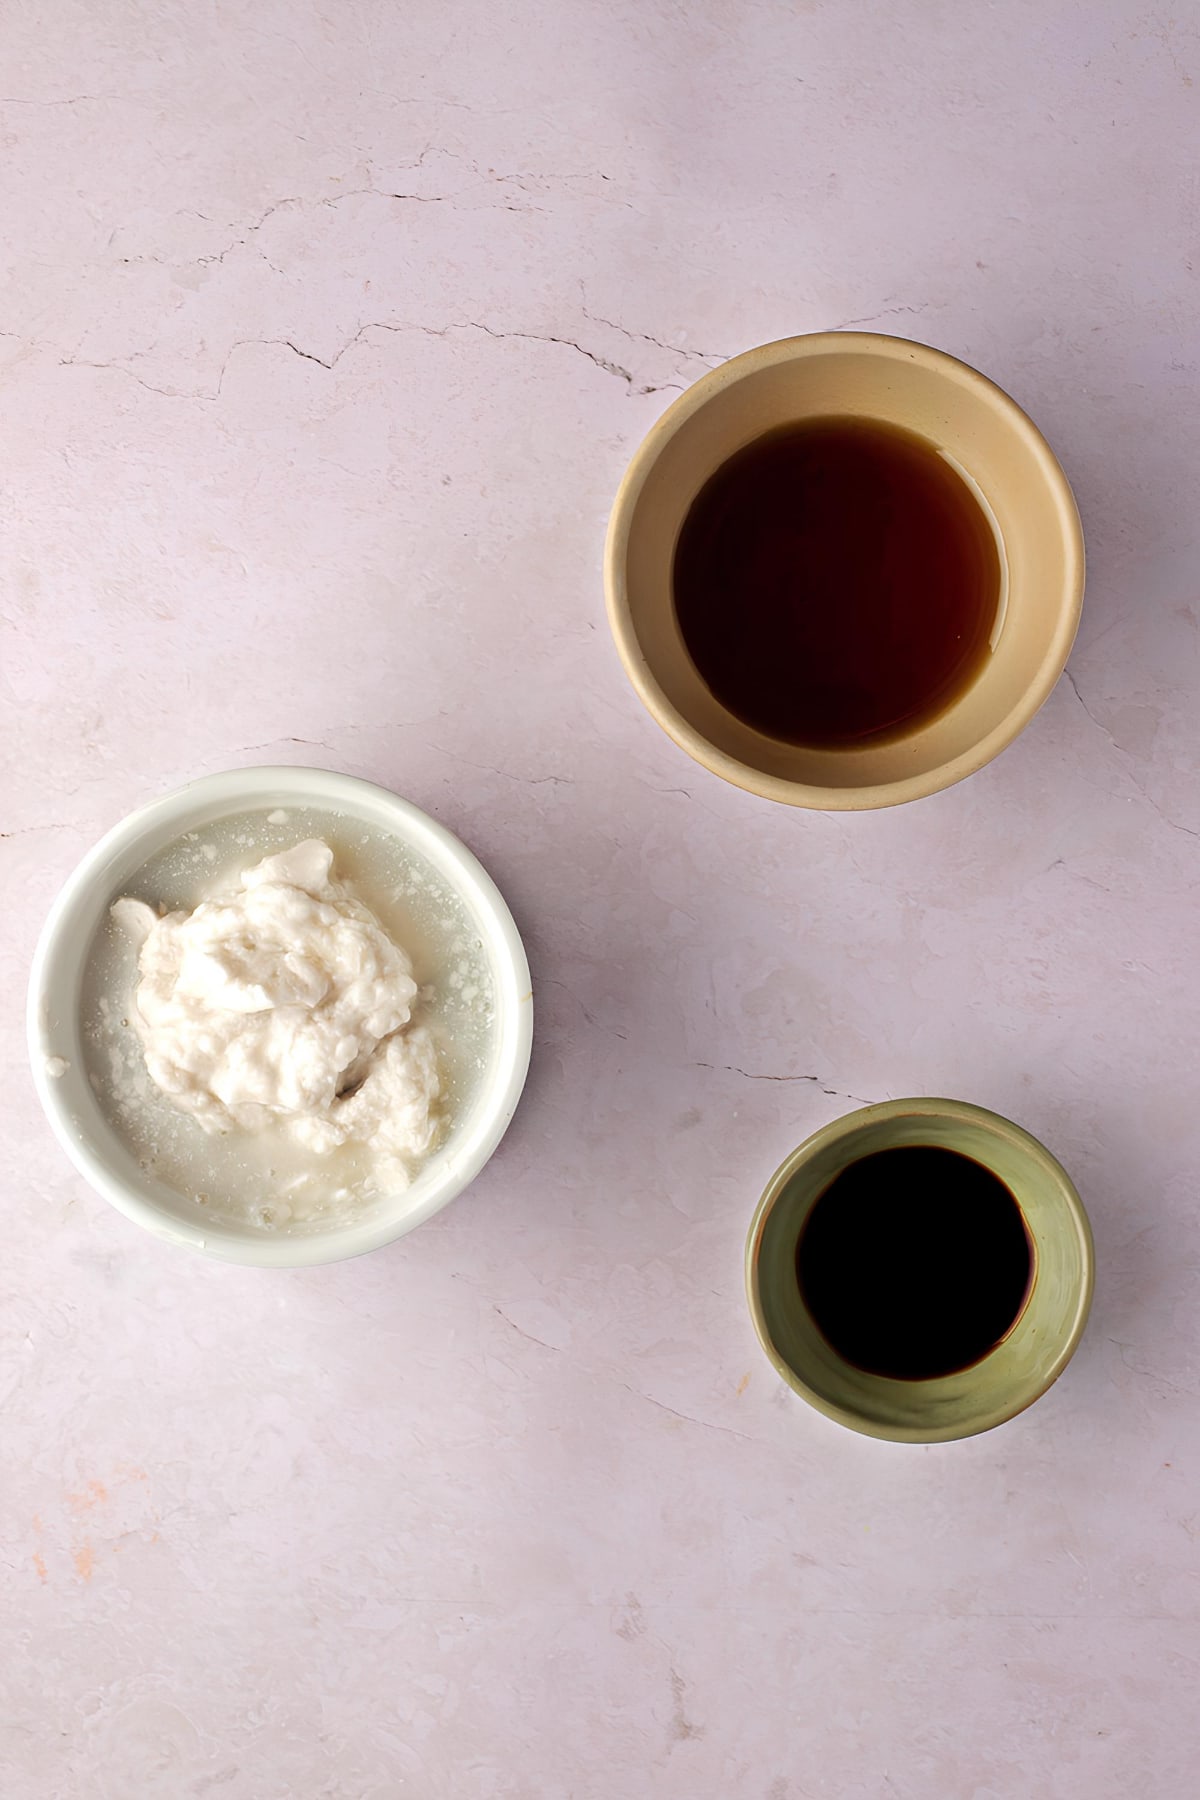 Coconut coffee creamer ingredients: coconut milk, honey and vanilla extract.